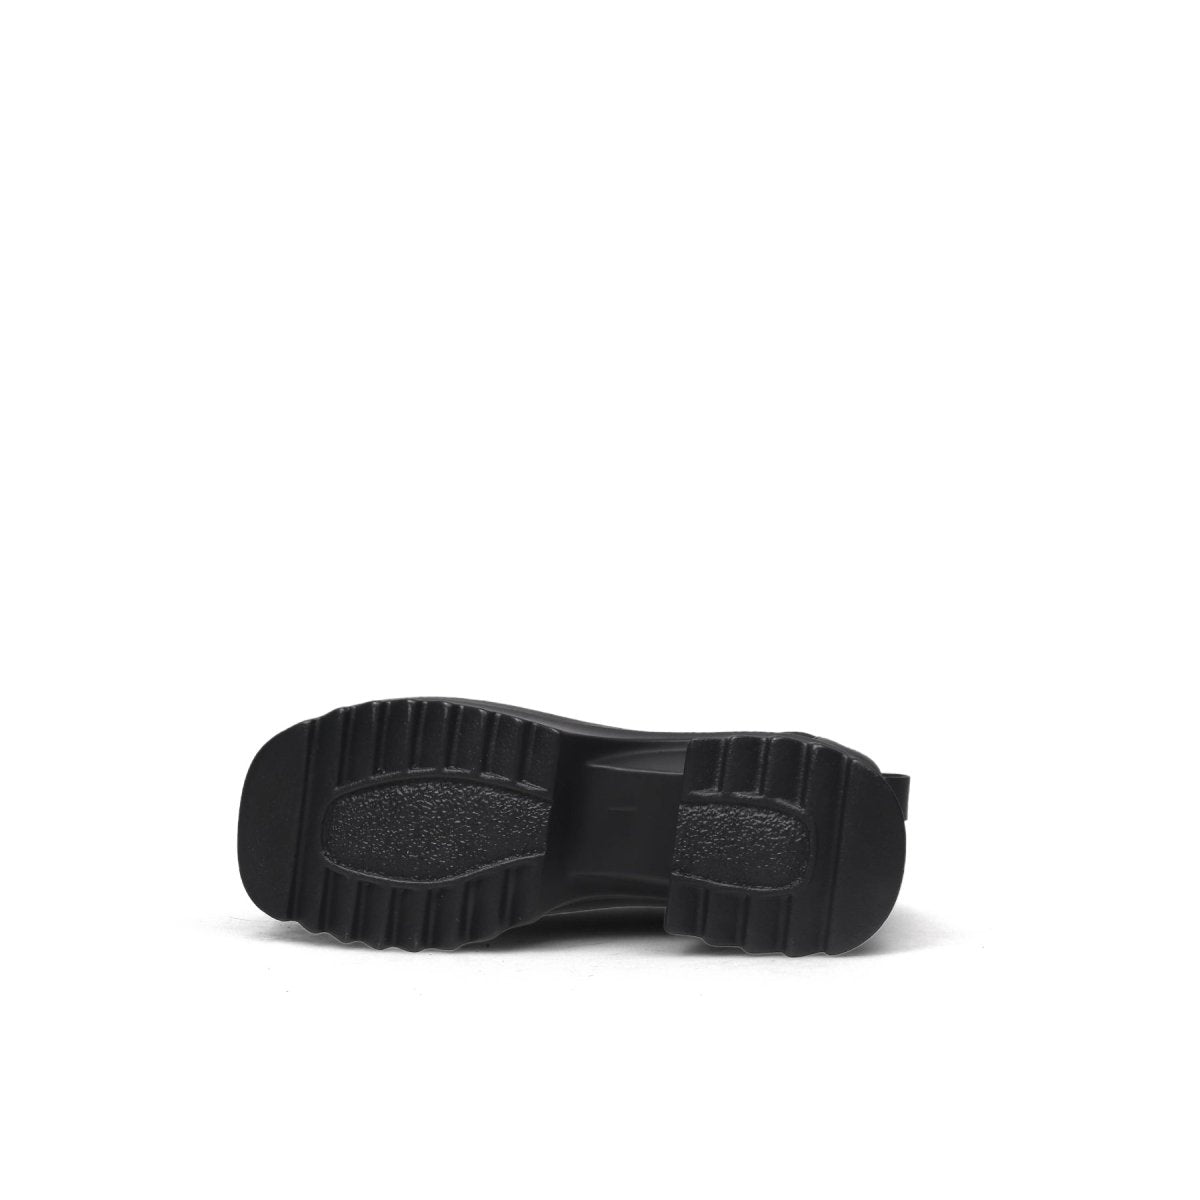 Comfort Zone Black Boots - 0cm